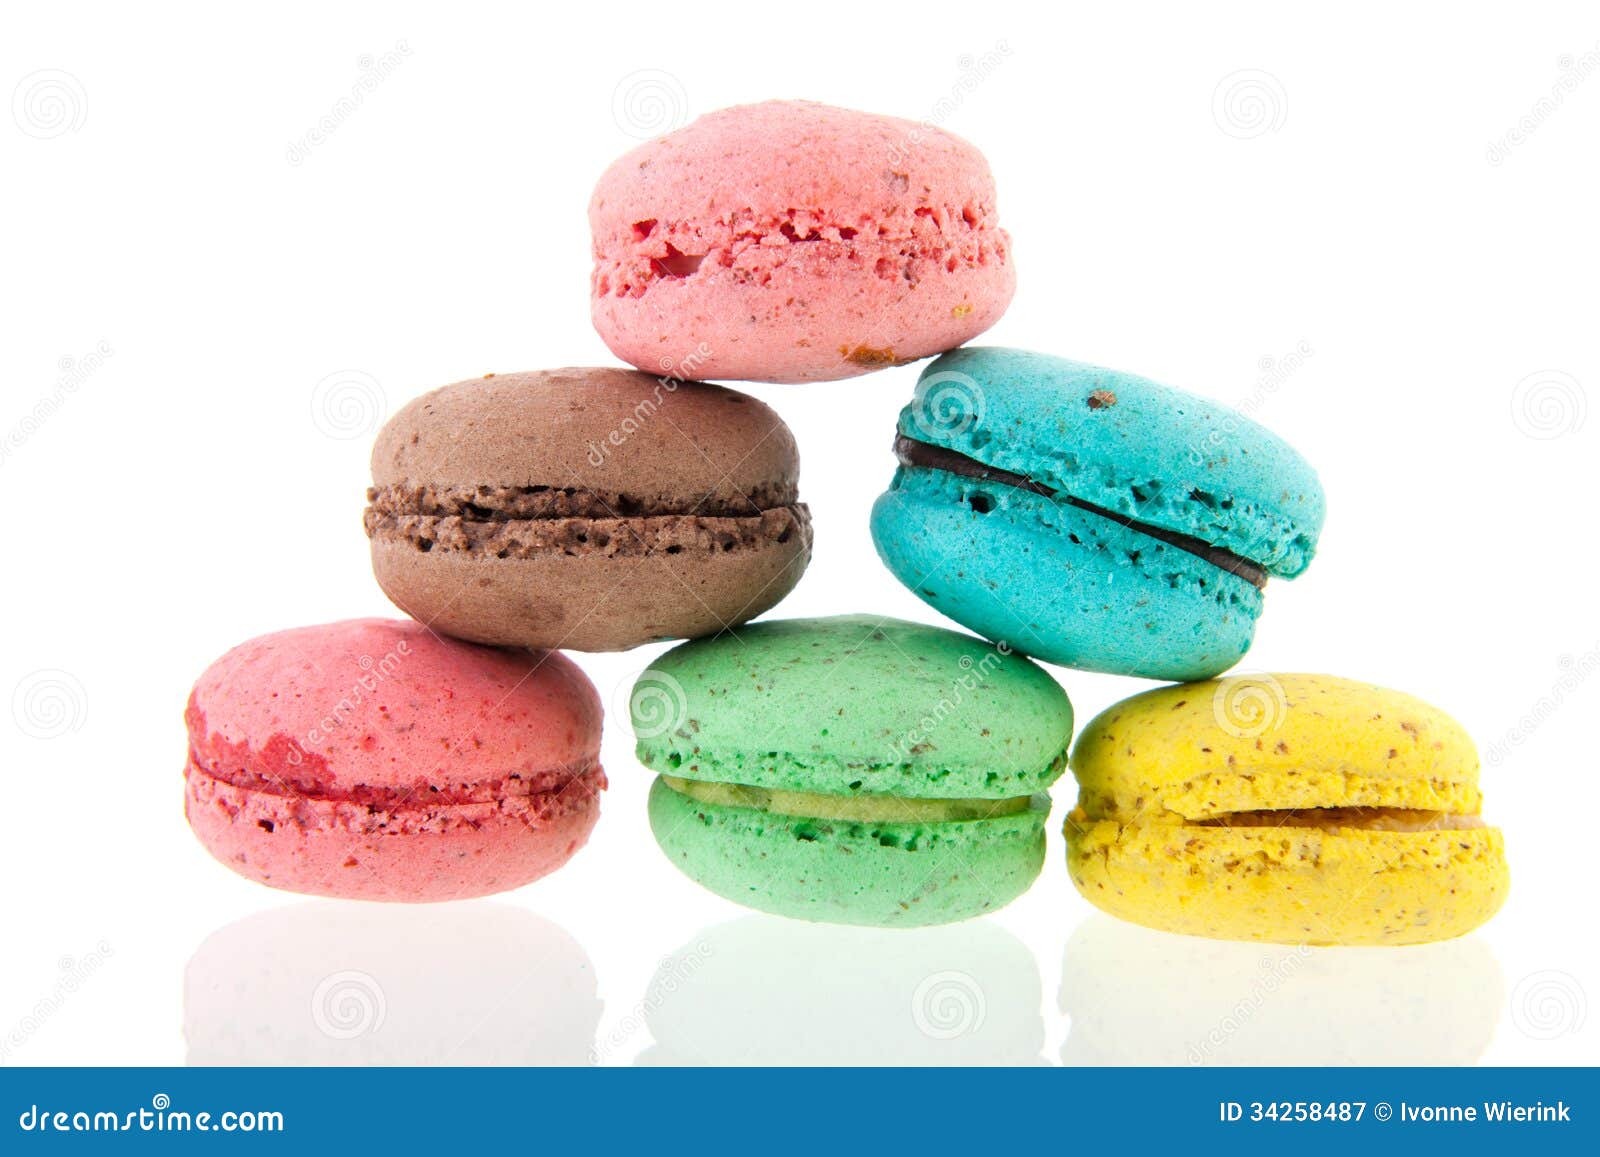 French fresh Macaroons stock image. Image of blue, pink - 34258487